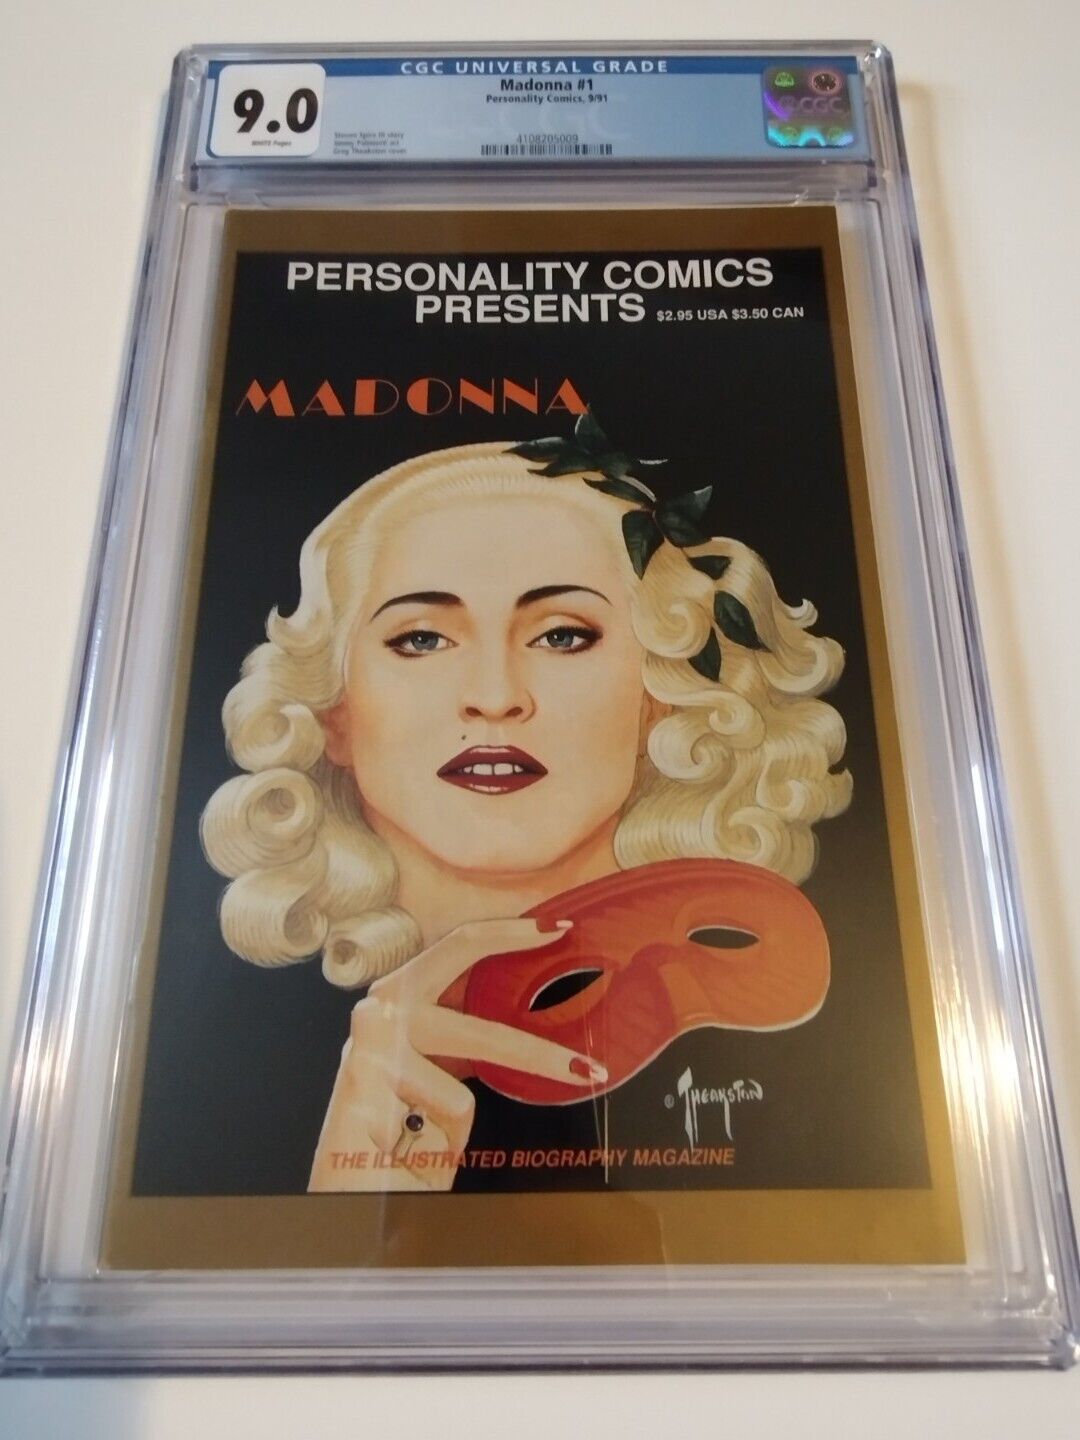 Personality Comics Presents Madonna #1 CGC Graded 9.0